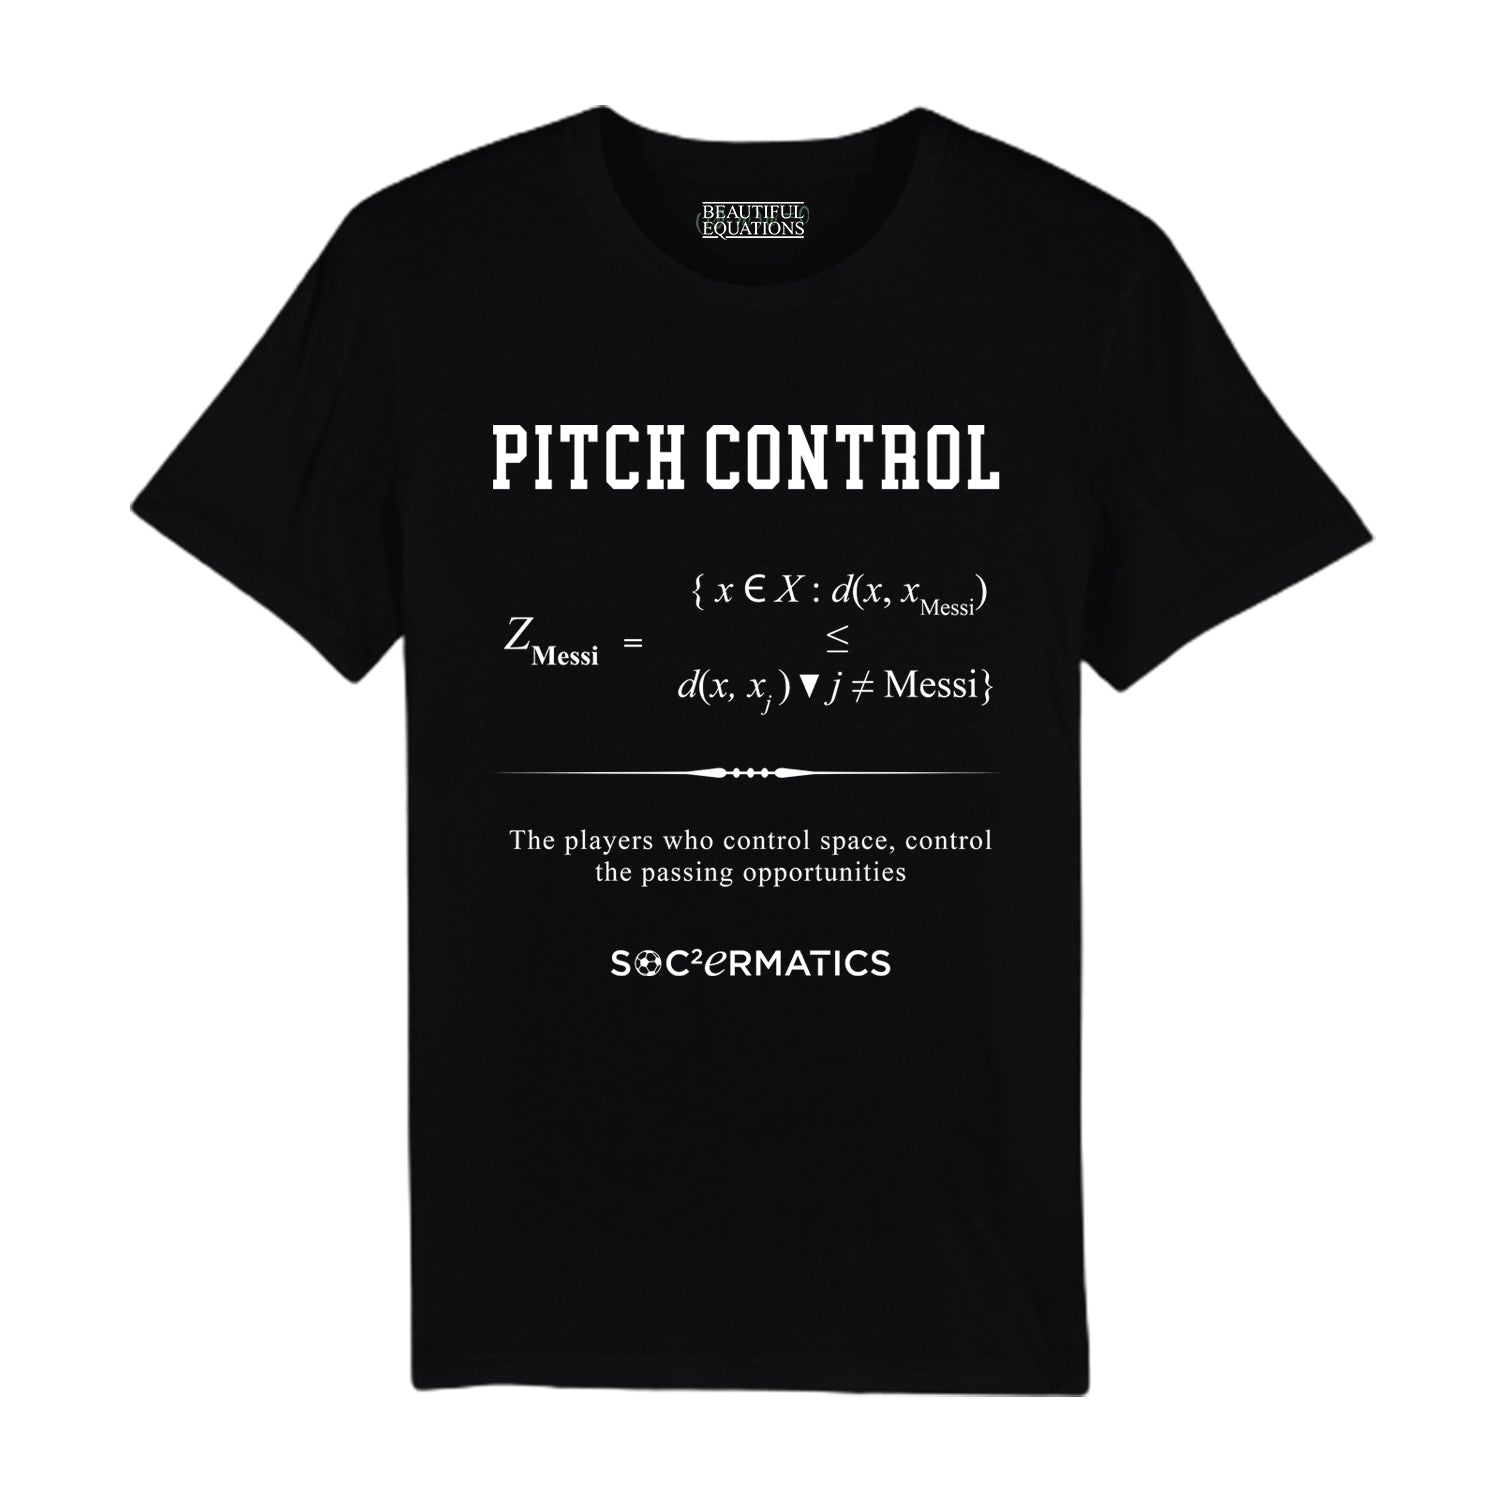 Pitch Control - Soccermatics - Tee